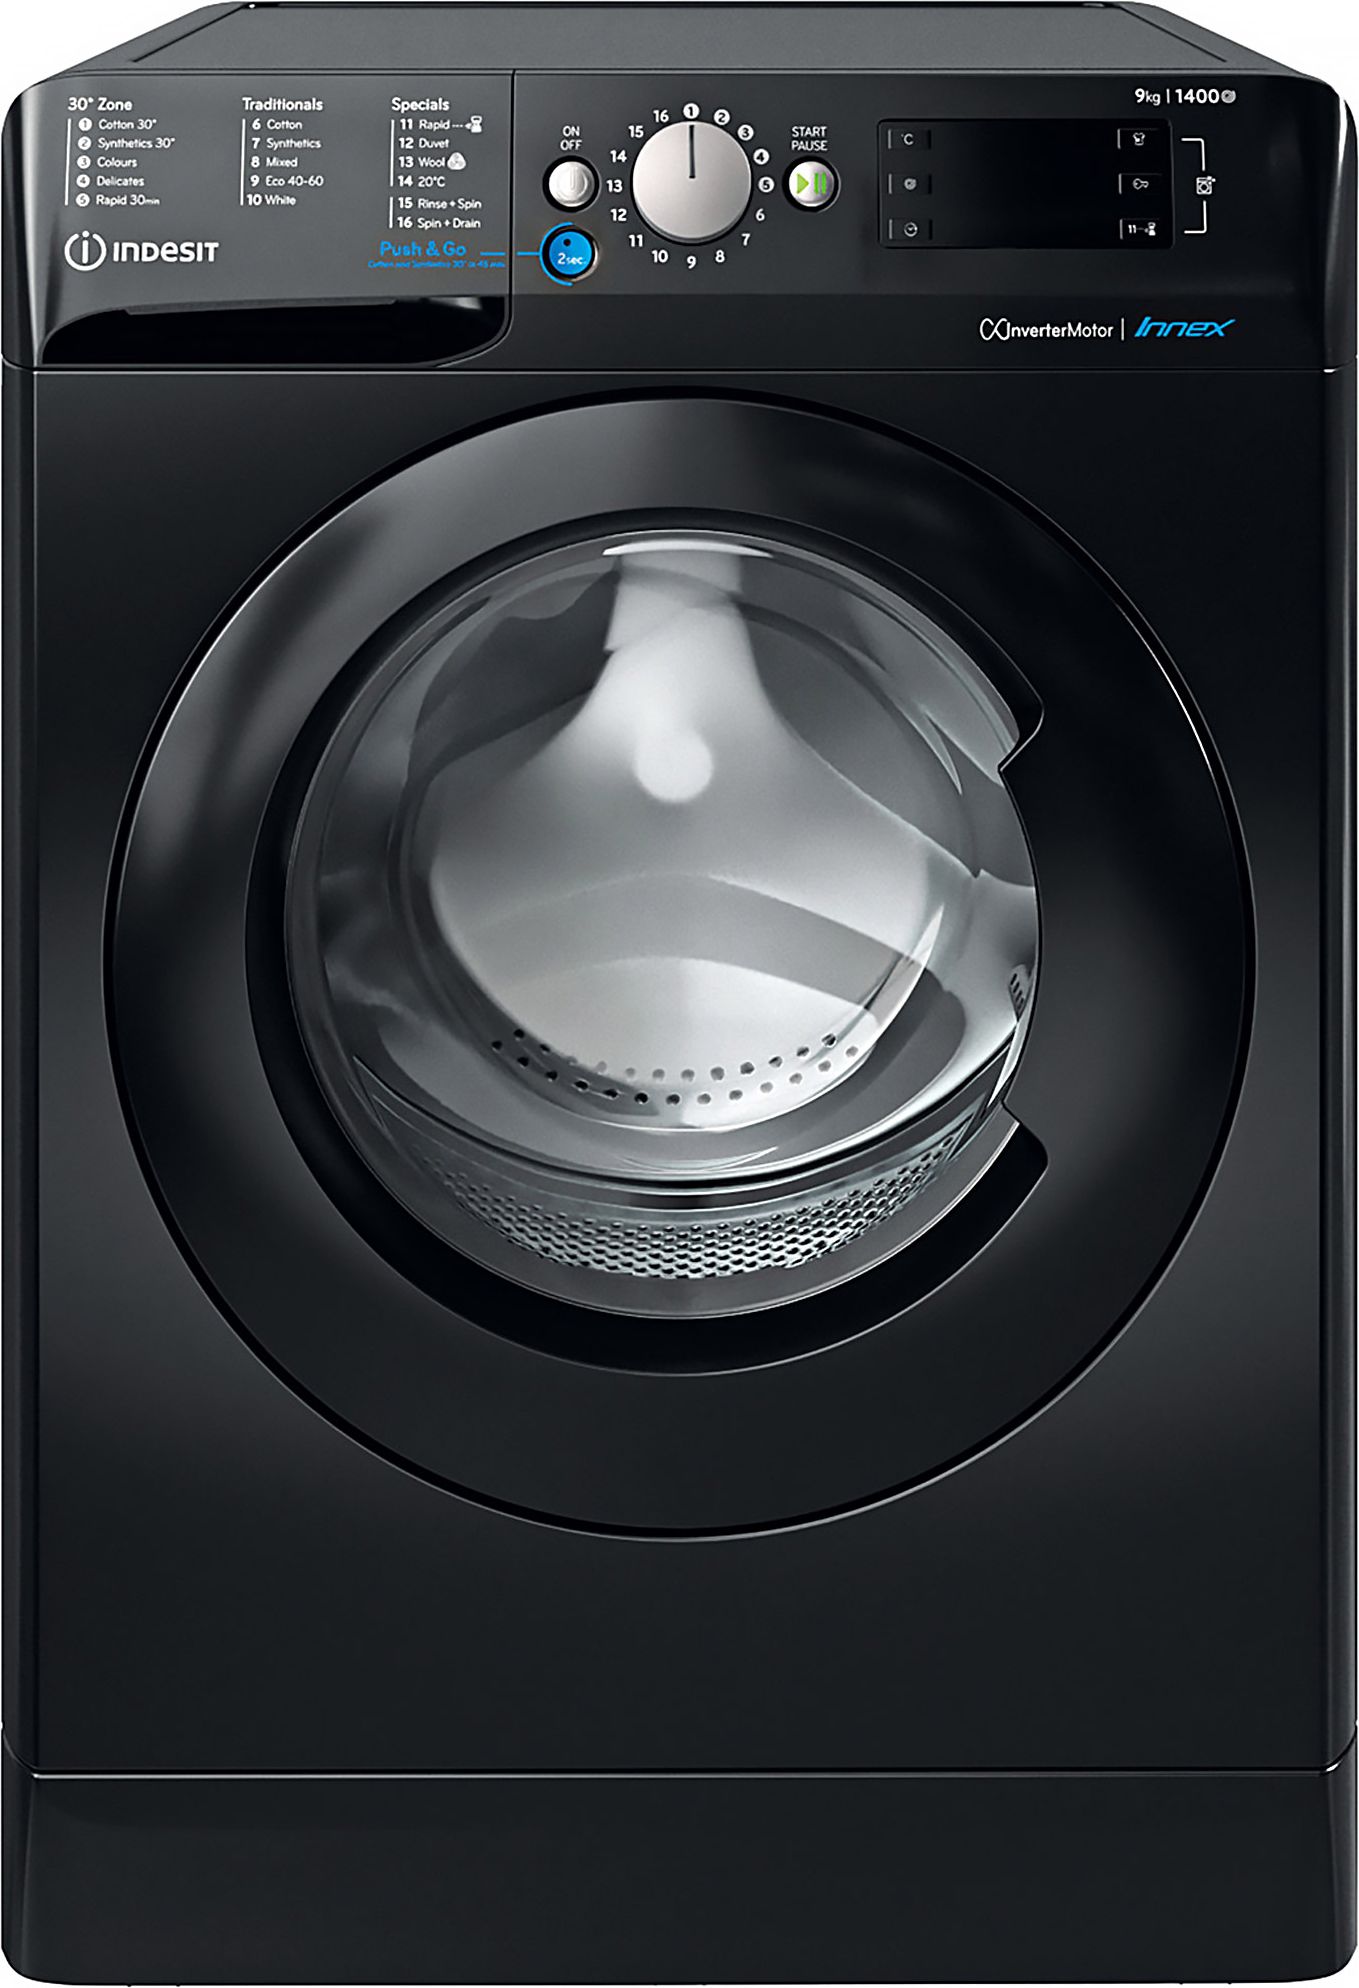 Indesit BWE91496XKUKN 9kg Washing Machine with 1400 rpm - Black - A Rated, Black